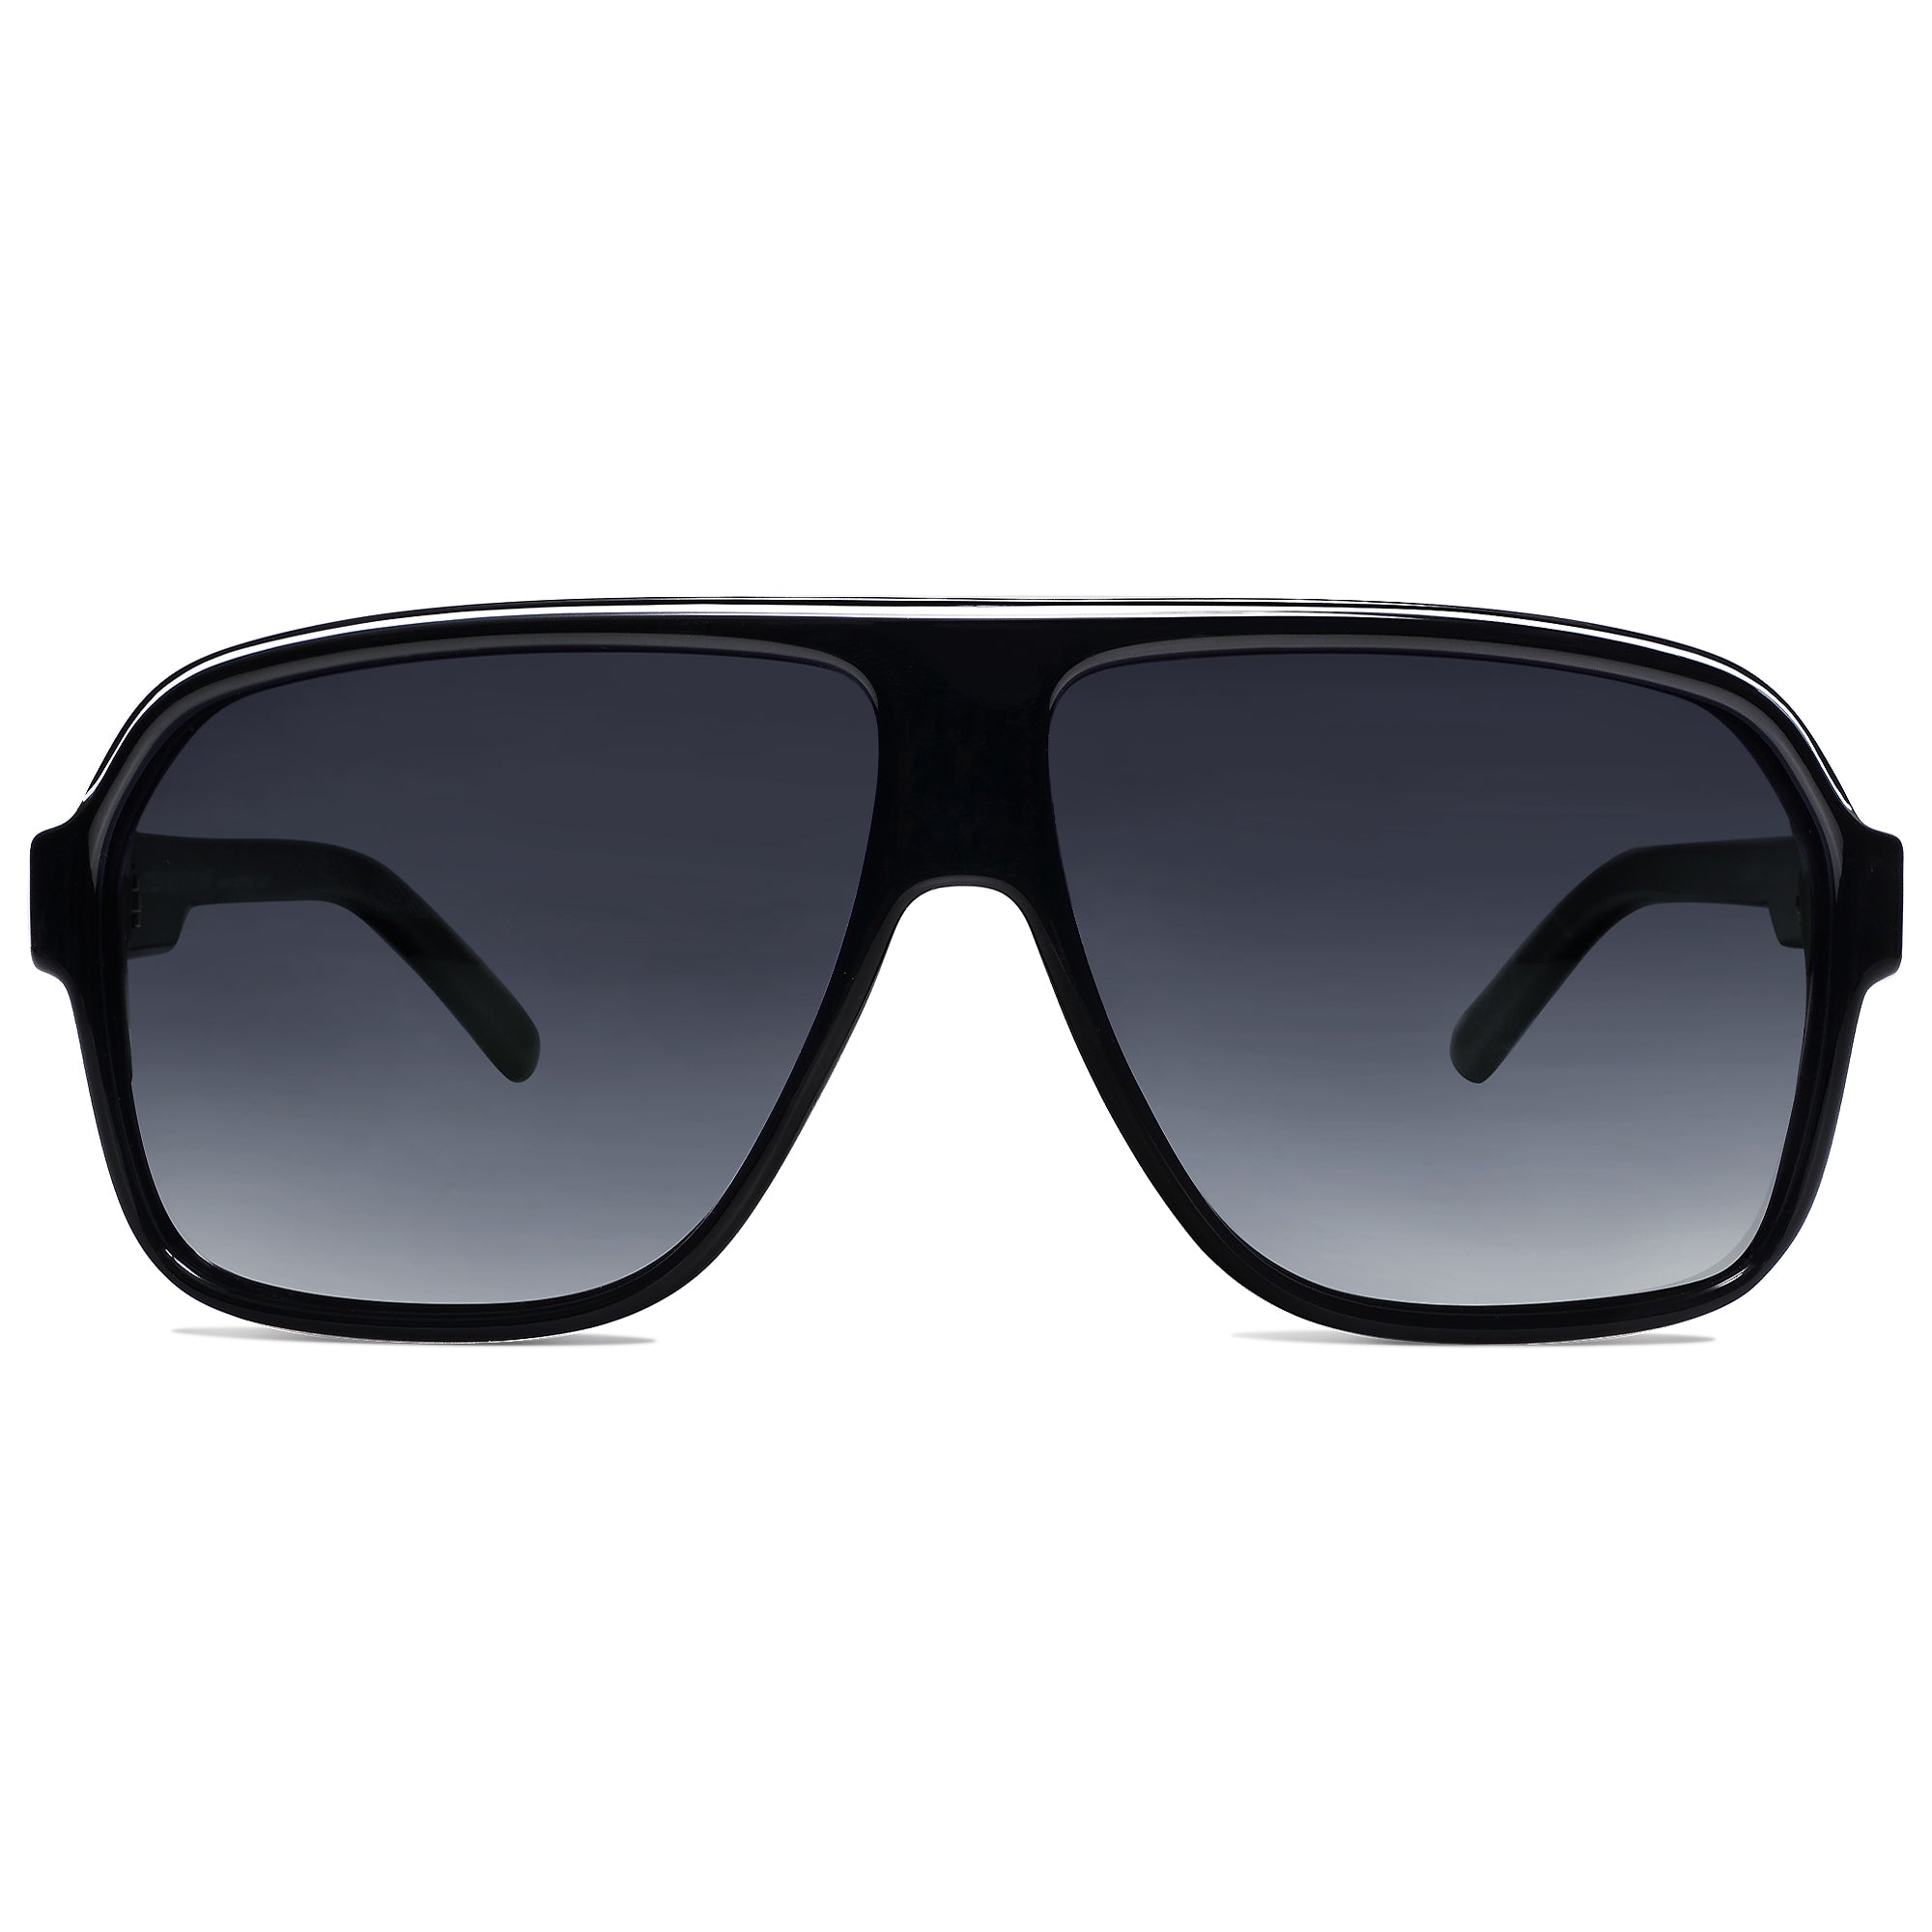 Vanlinker Square Aviator Sunglasses Sunglasses for Men Square Shades ...